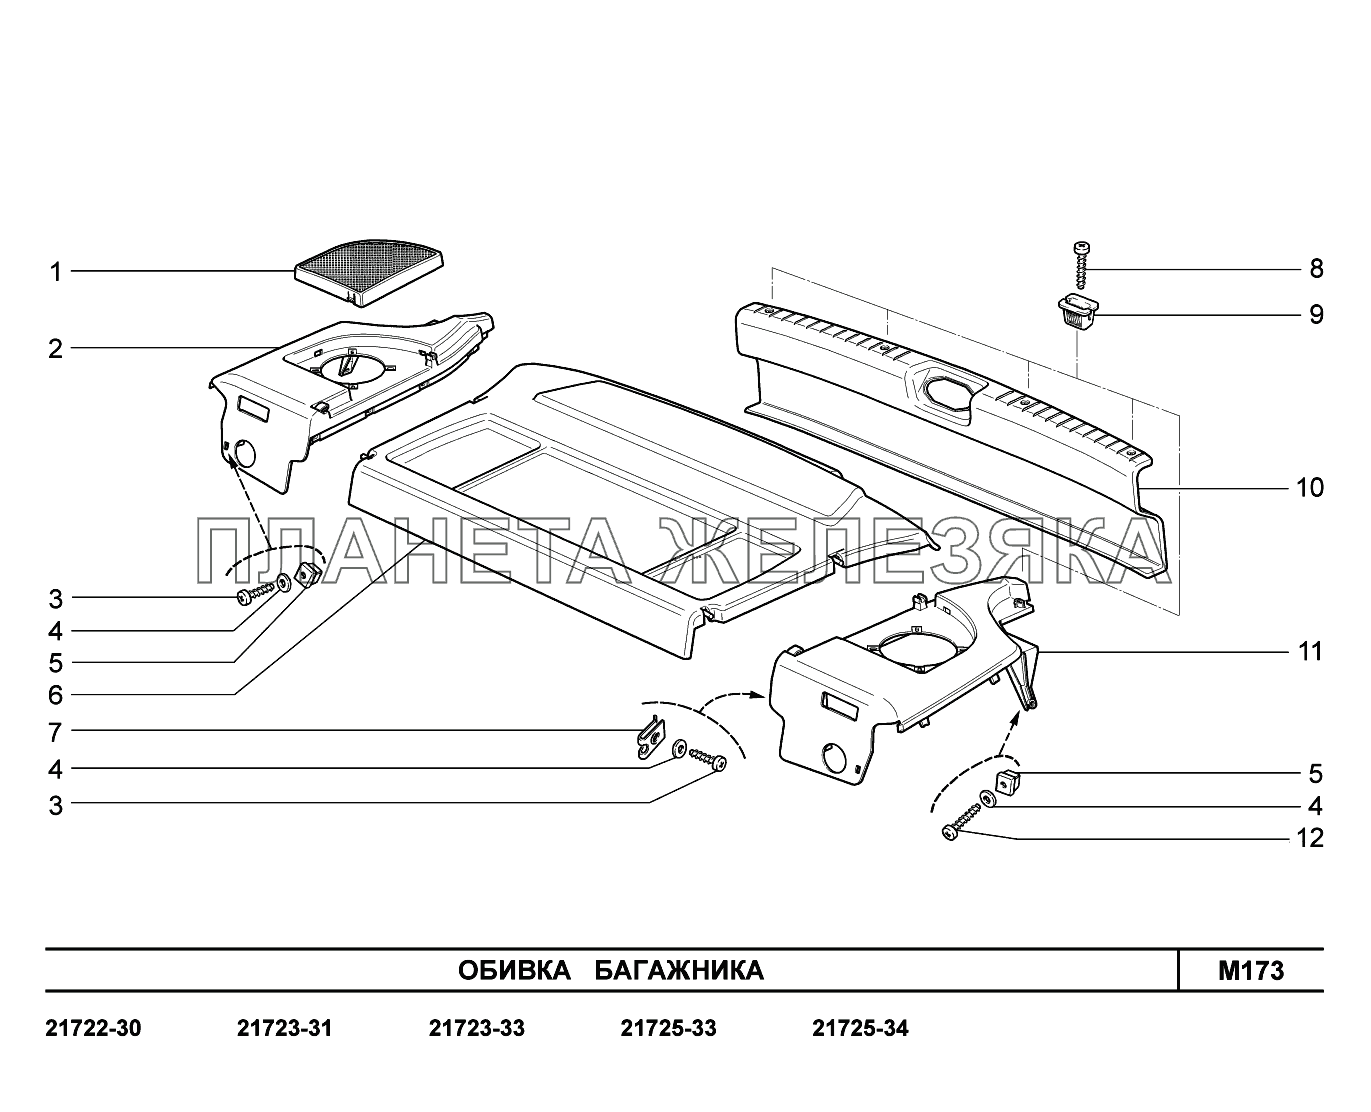 M173. Обивка багажника ВАЗ-2170 